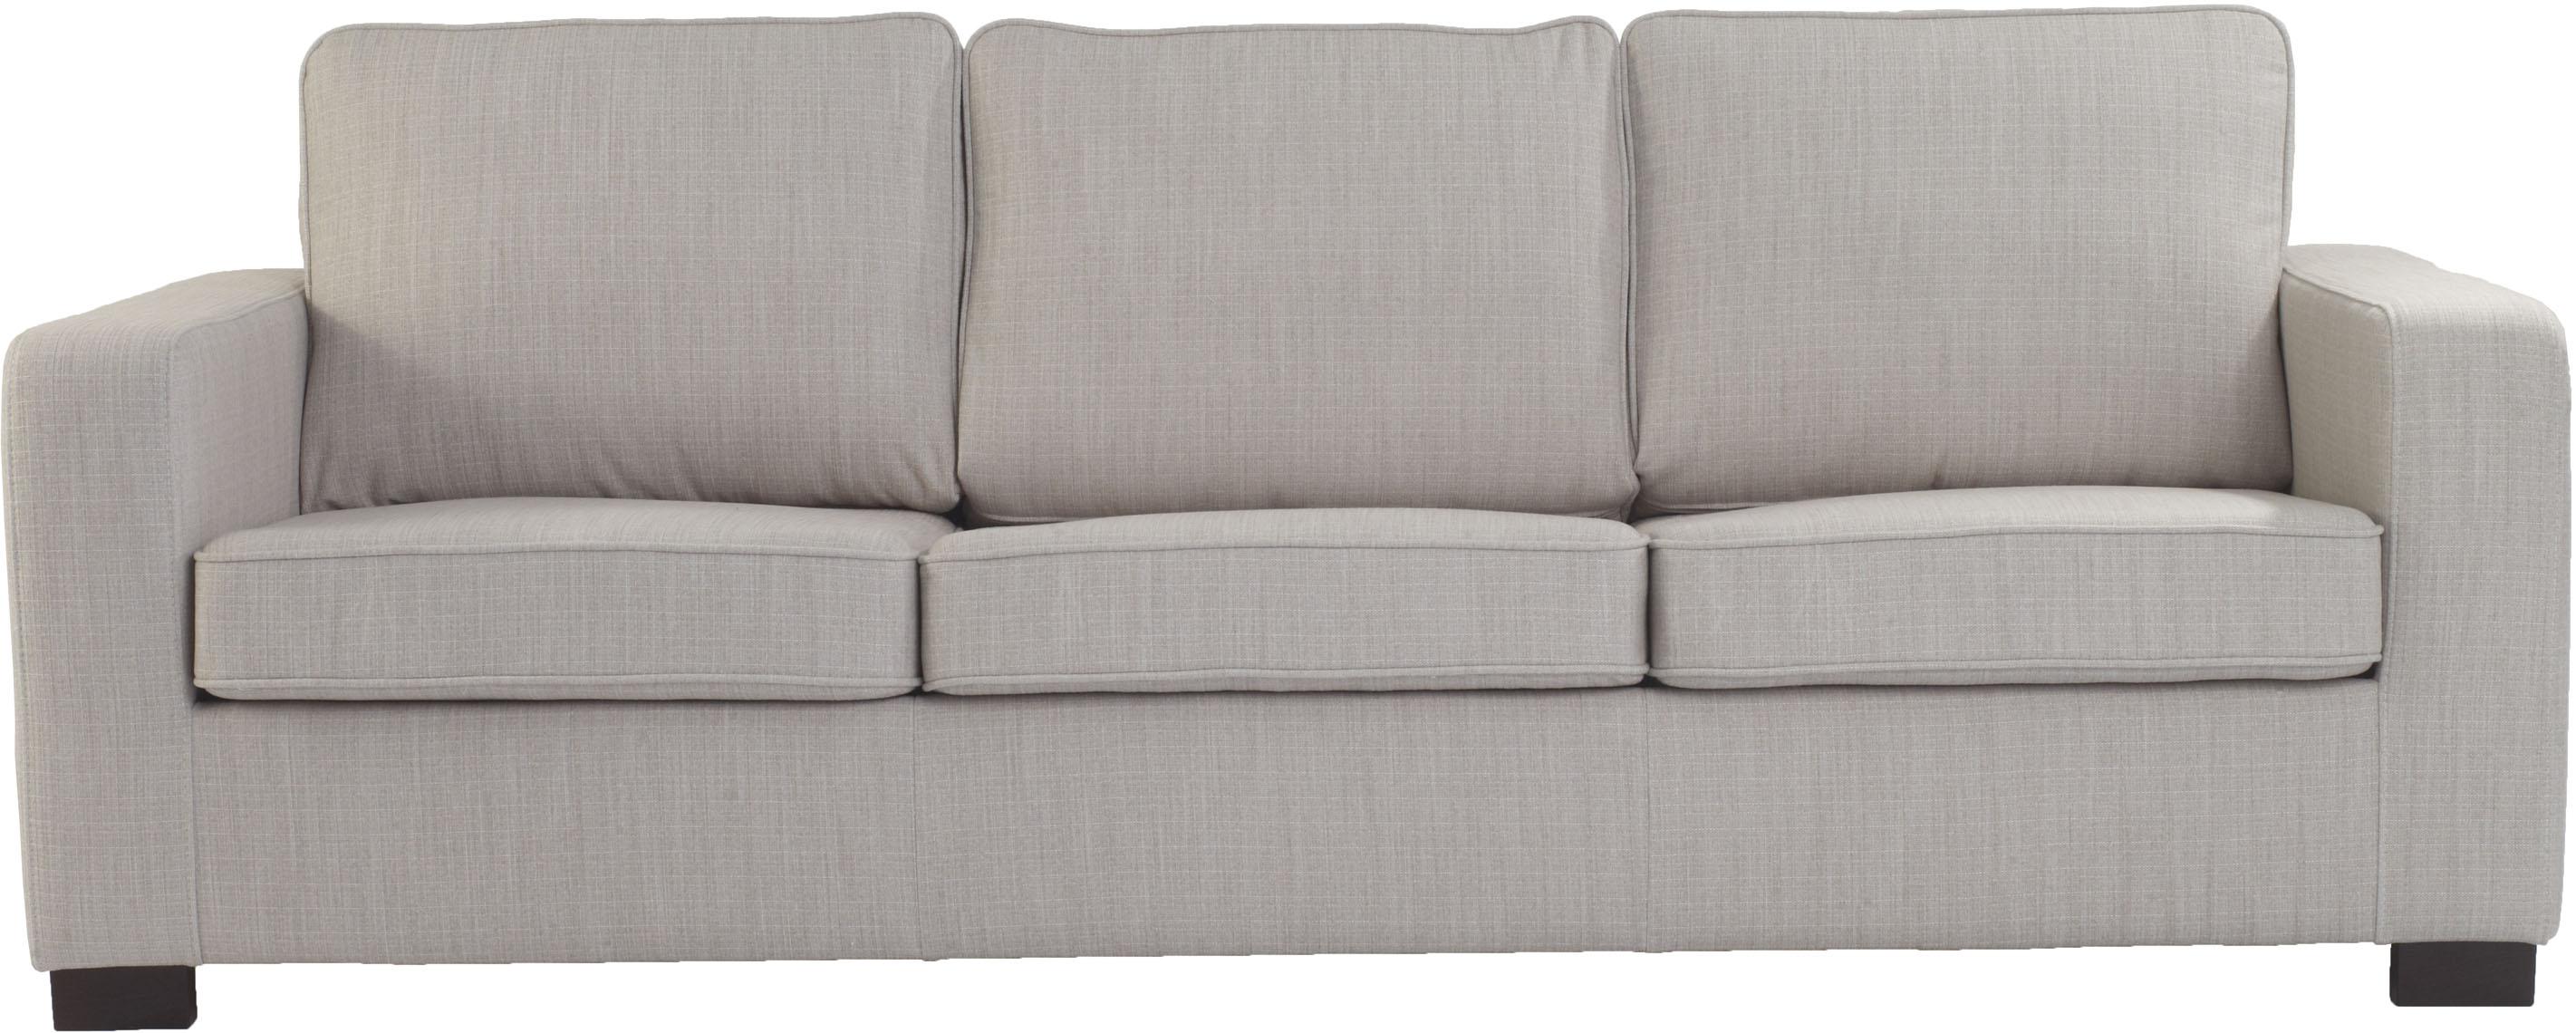 3-seat sofa bed Noel